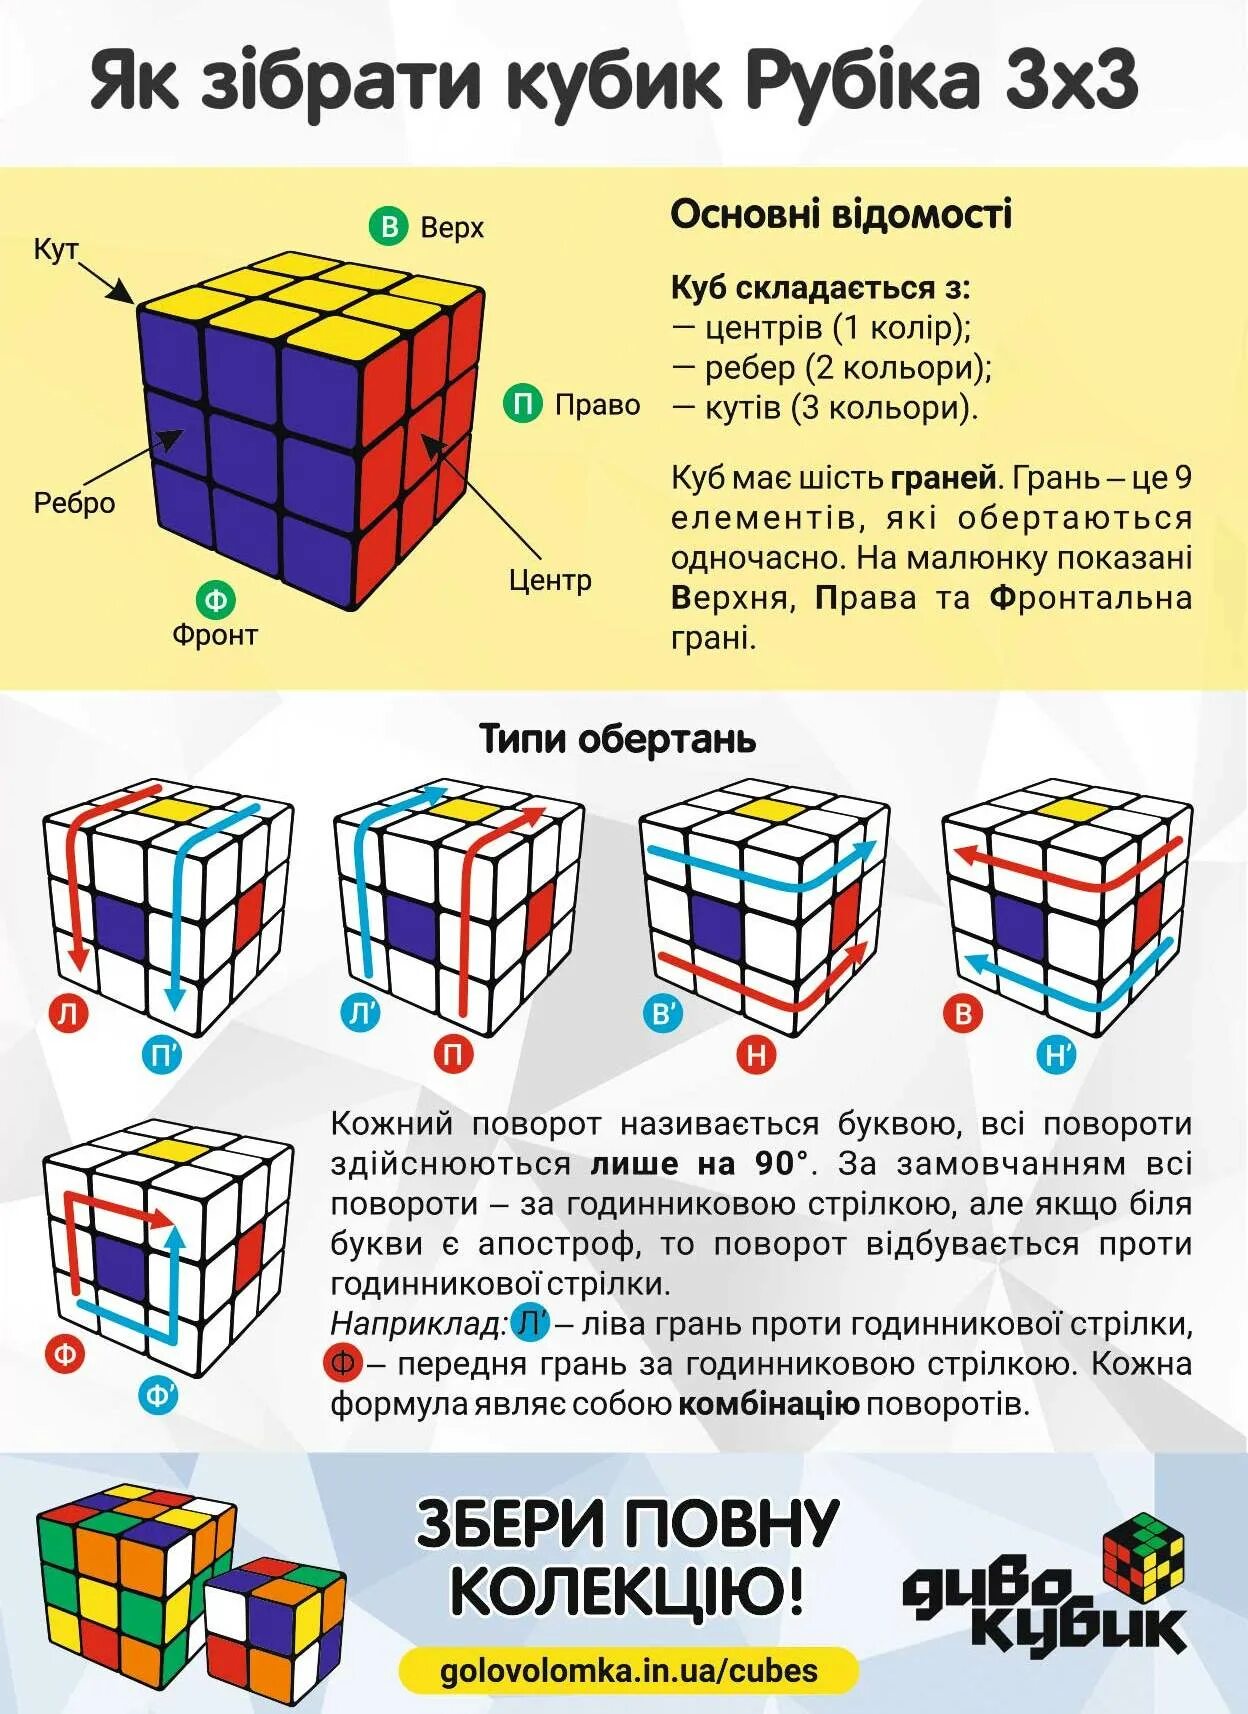 Инструкция по сборке кубика. Алгоритмы по сборке кубика Рубика 3х3 для начинающих. Формулы кубика Рубика 3х3 для начинающих. Комбинации кубика Рубика 3х3. Кубик-Рубика 3х3 сборка пошагово.